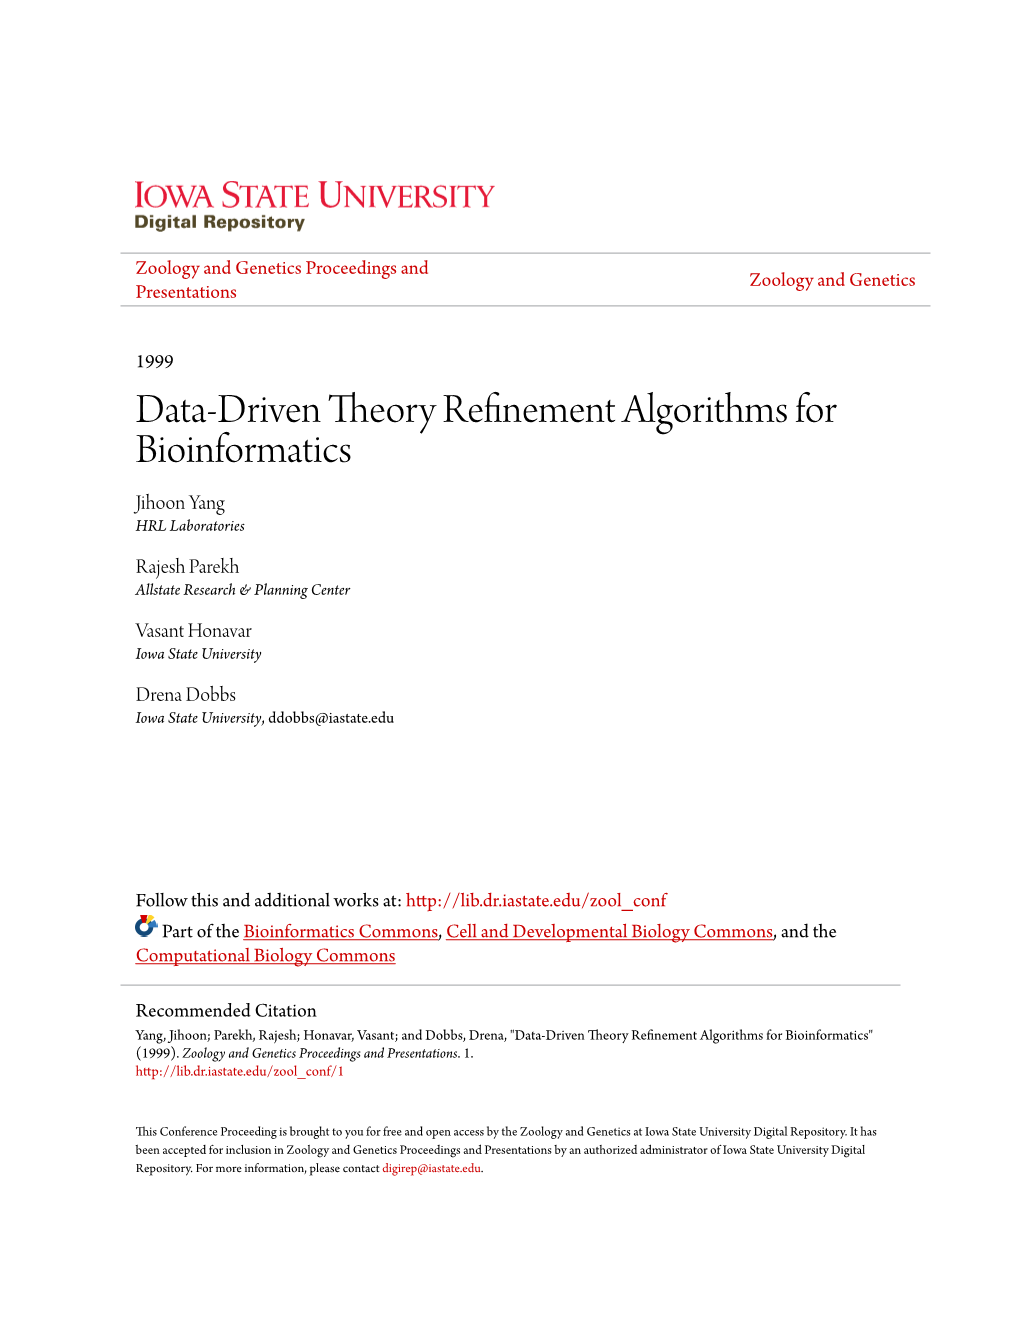 Data-Driven Theory Refinement Algorithms for Bioinformatics Jihoon Yang HRL Laboratories